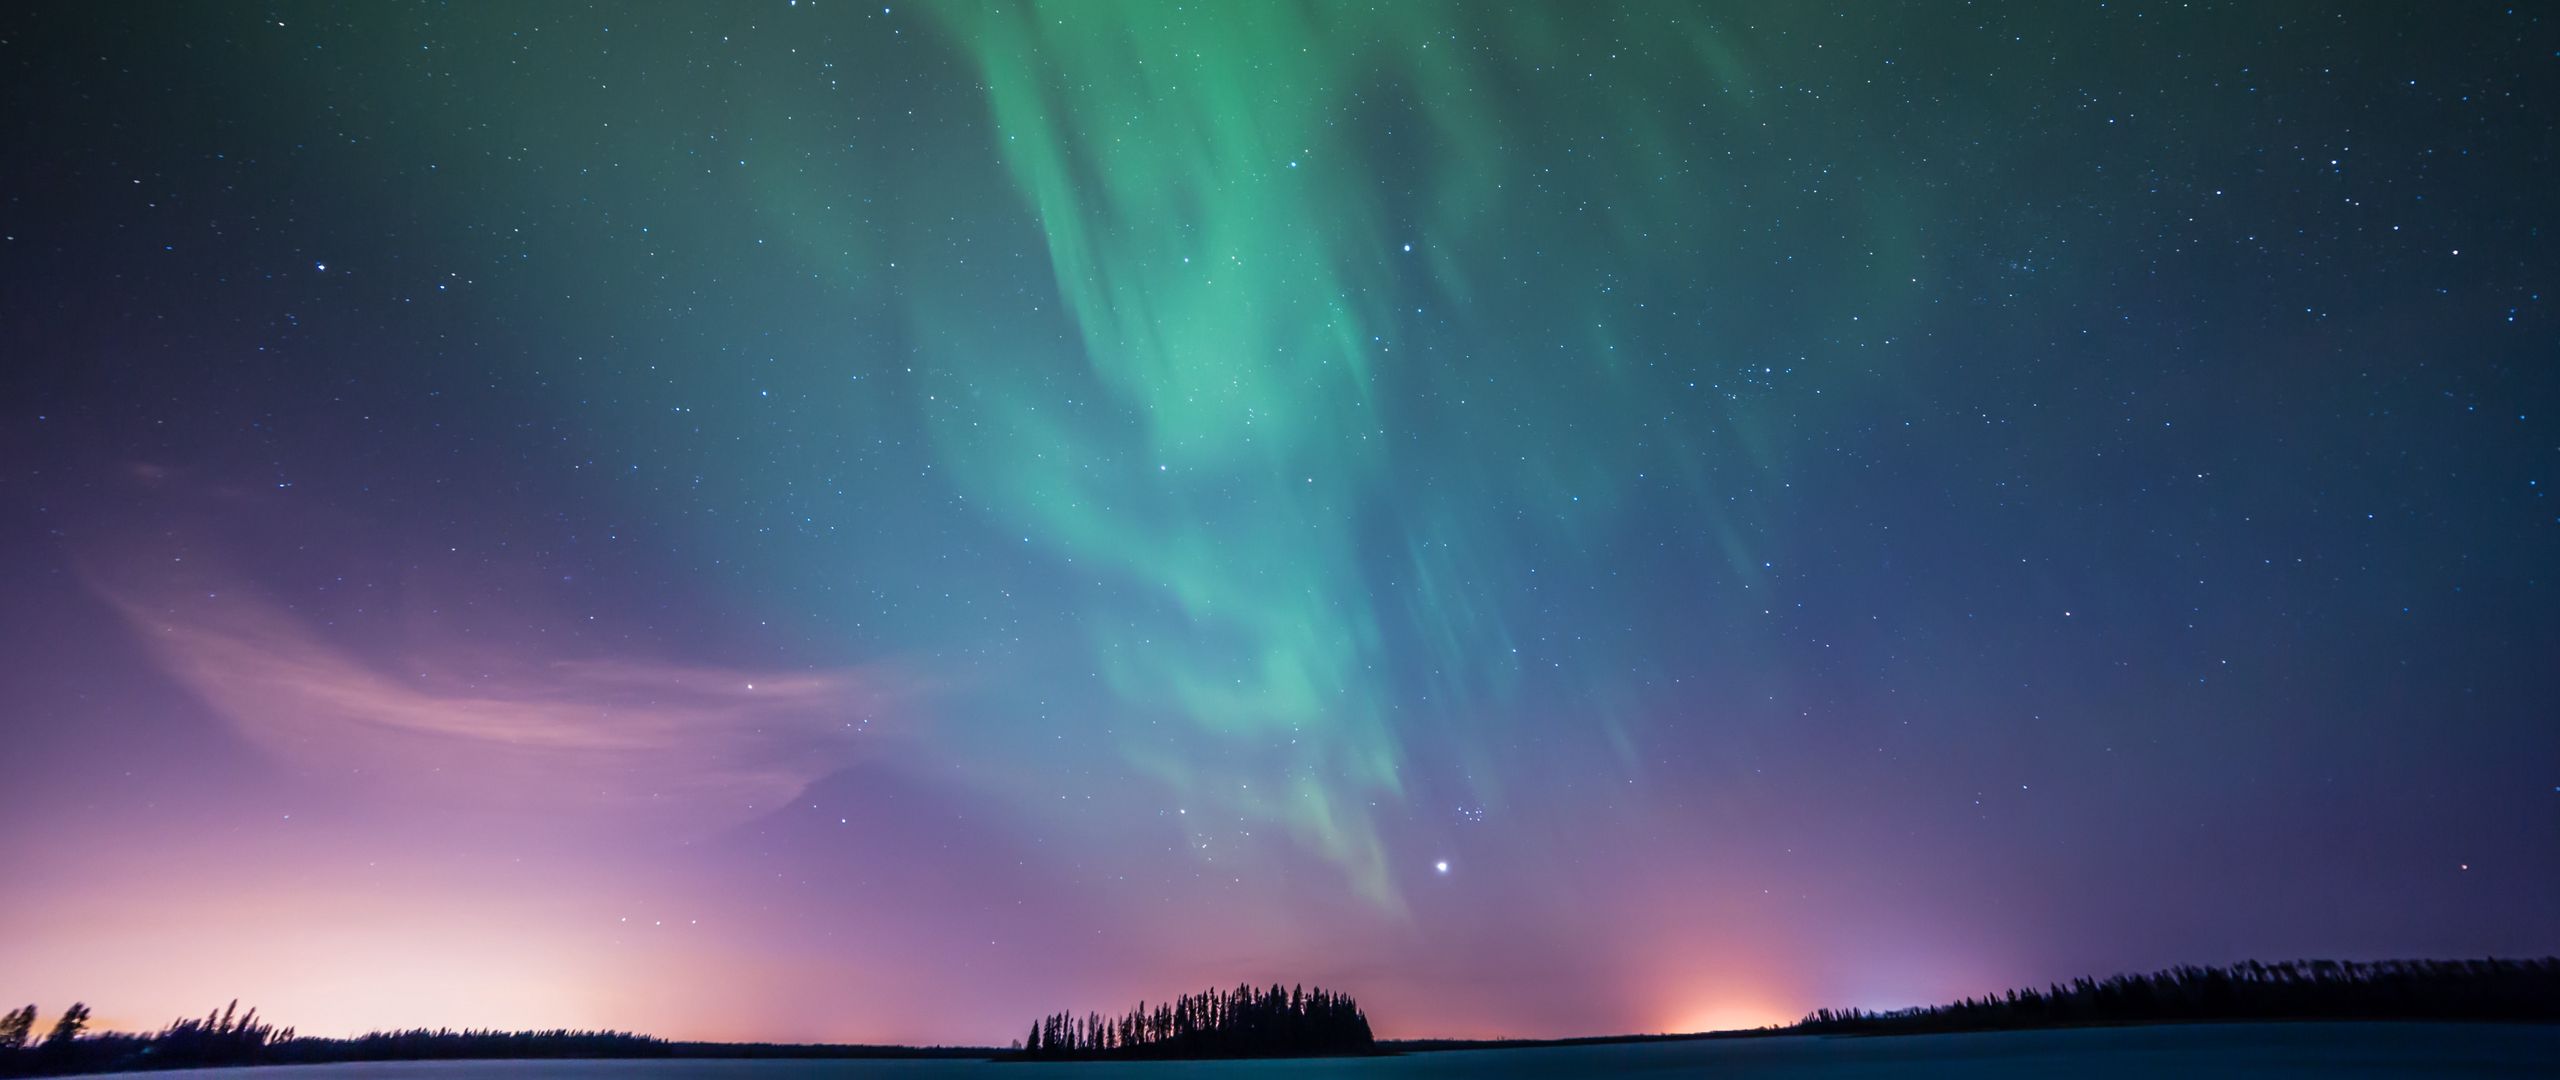 Download wallpaper 2560x1080 northern lights, aurora borealis, aurora, sky,  night, landscape dual wide 1080p hd background